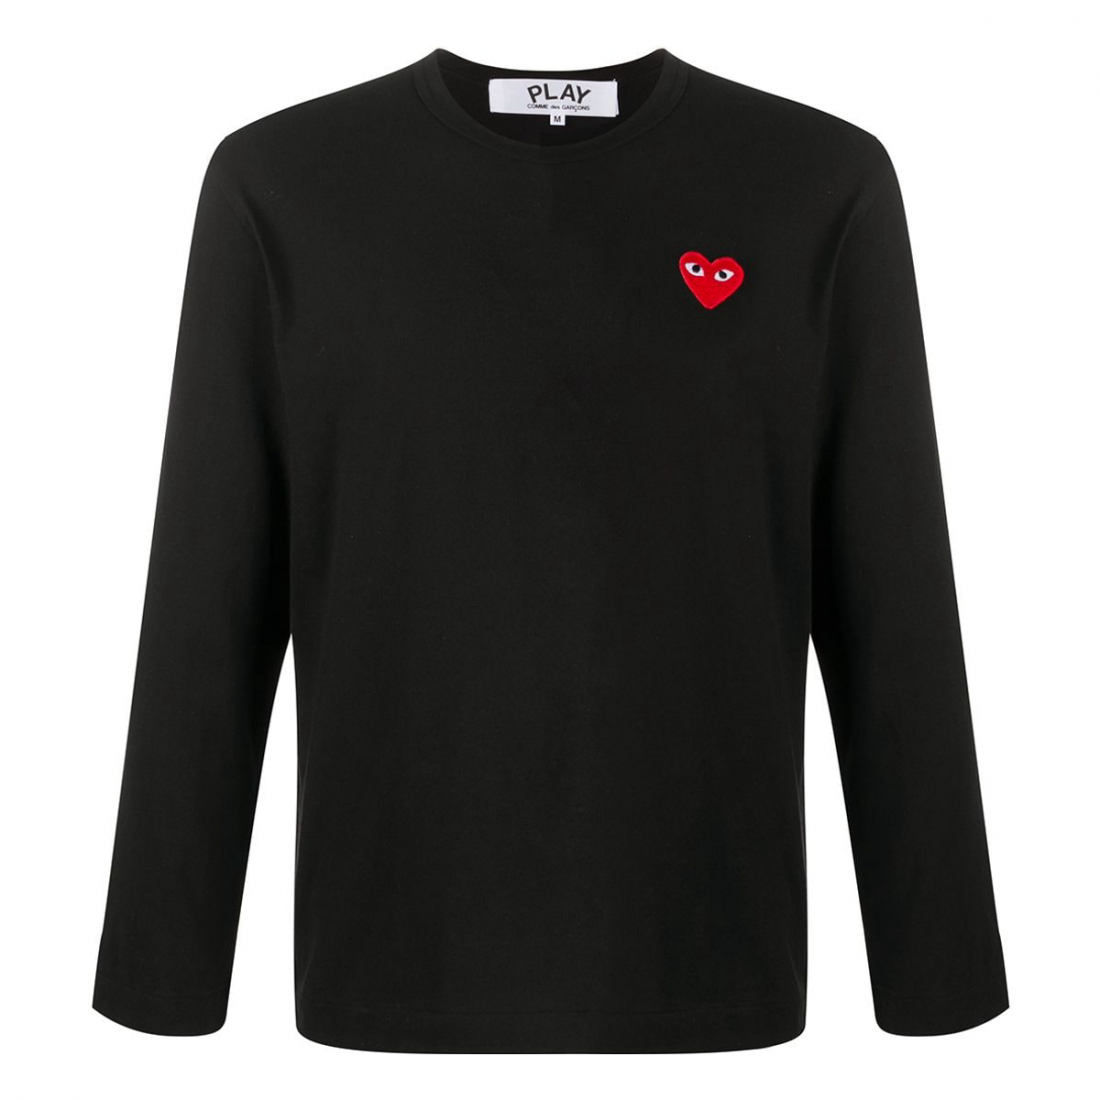 Men's 'Embroidered Heart' Long-Sleeve T-Shirt